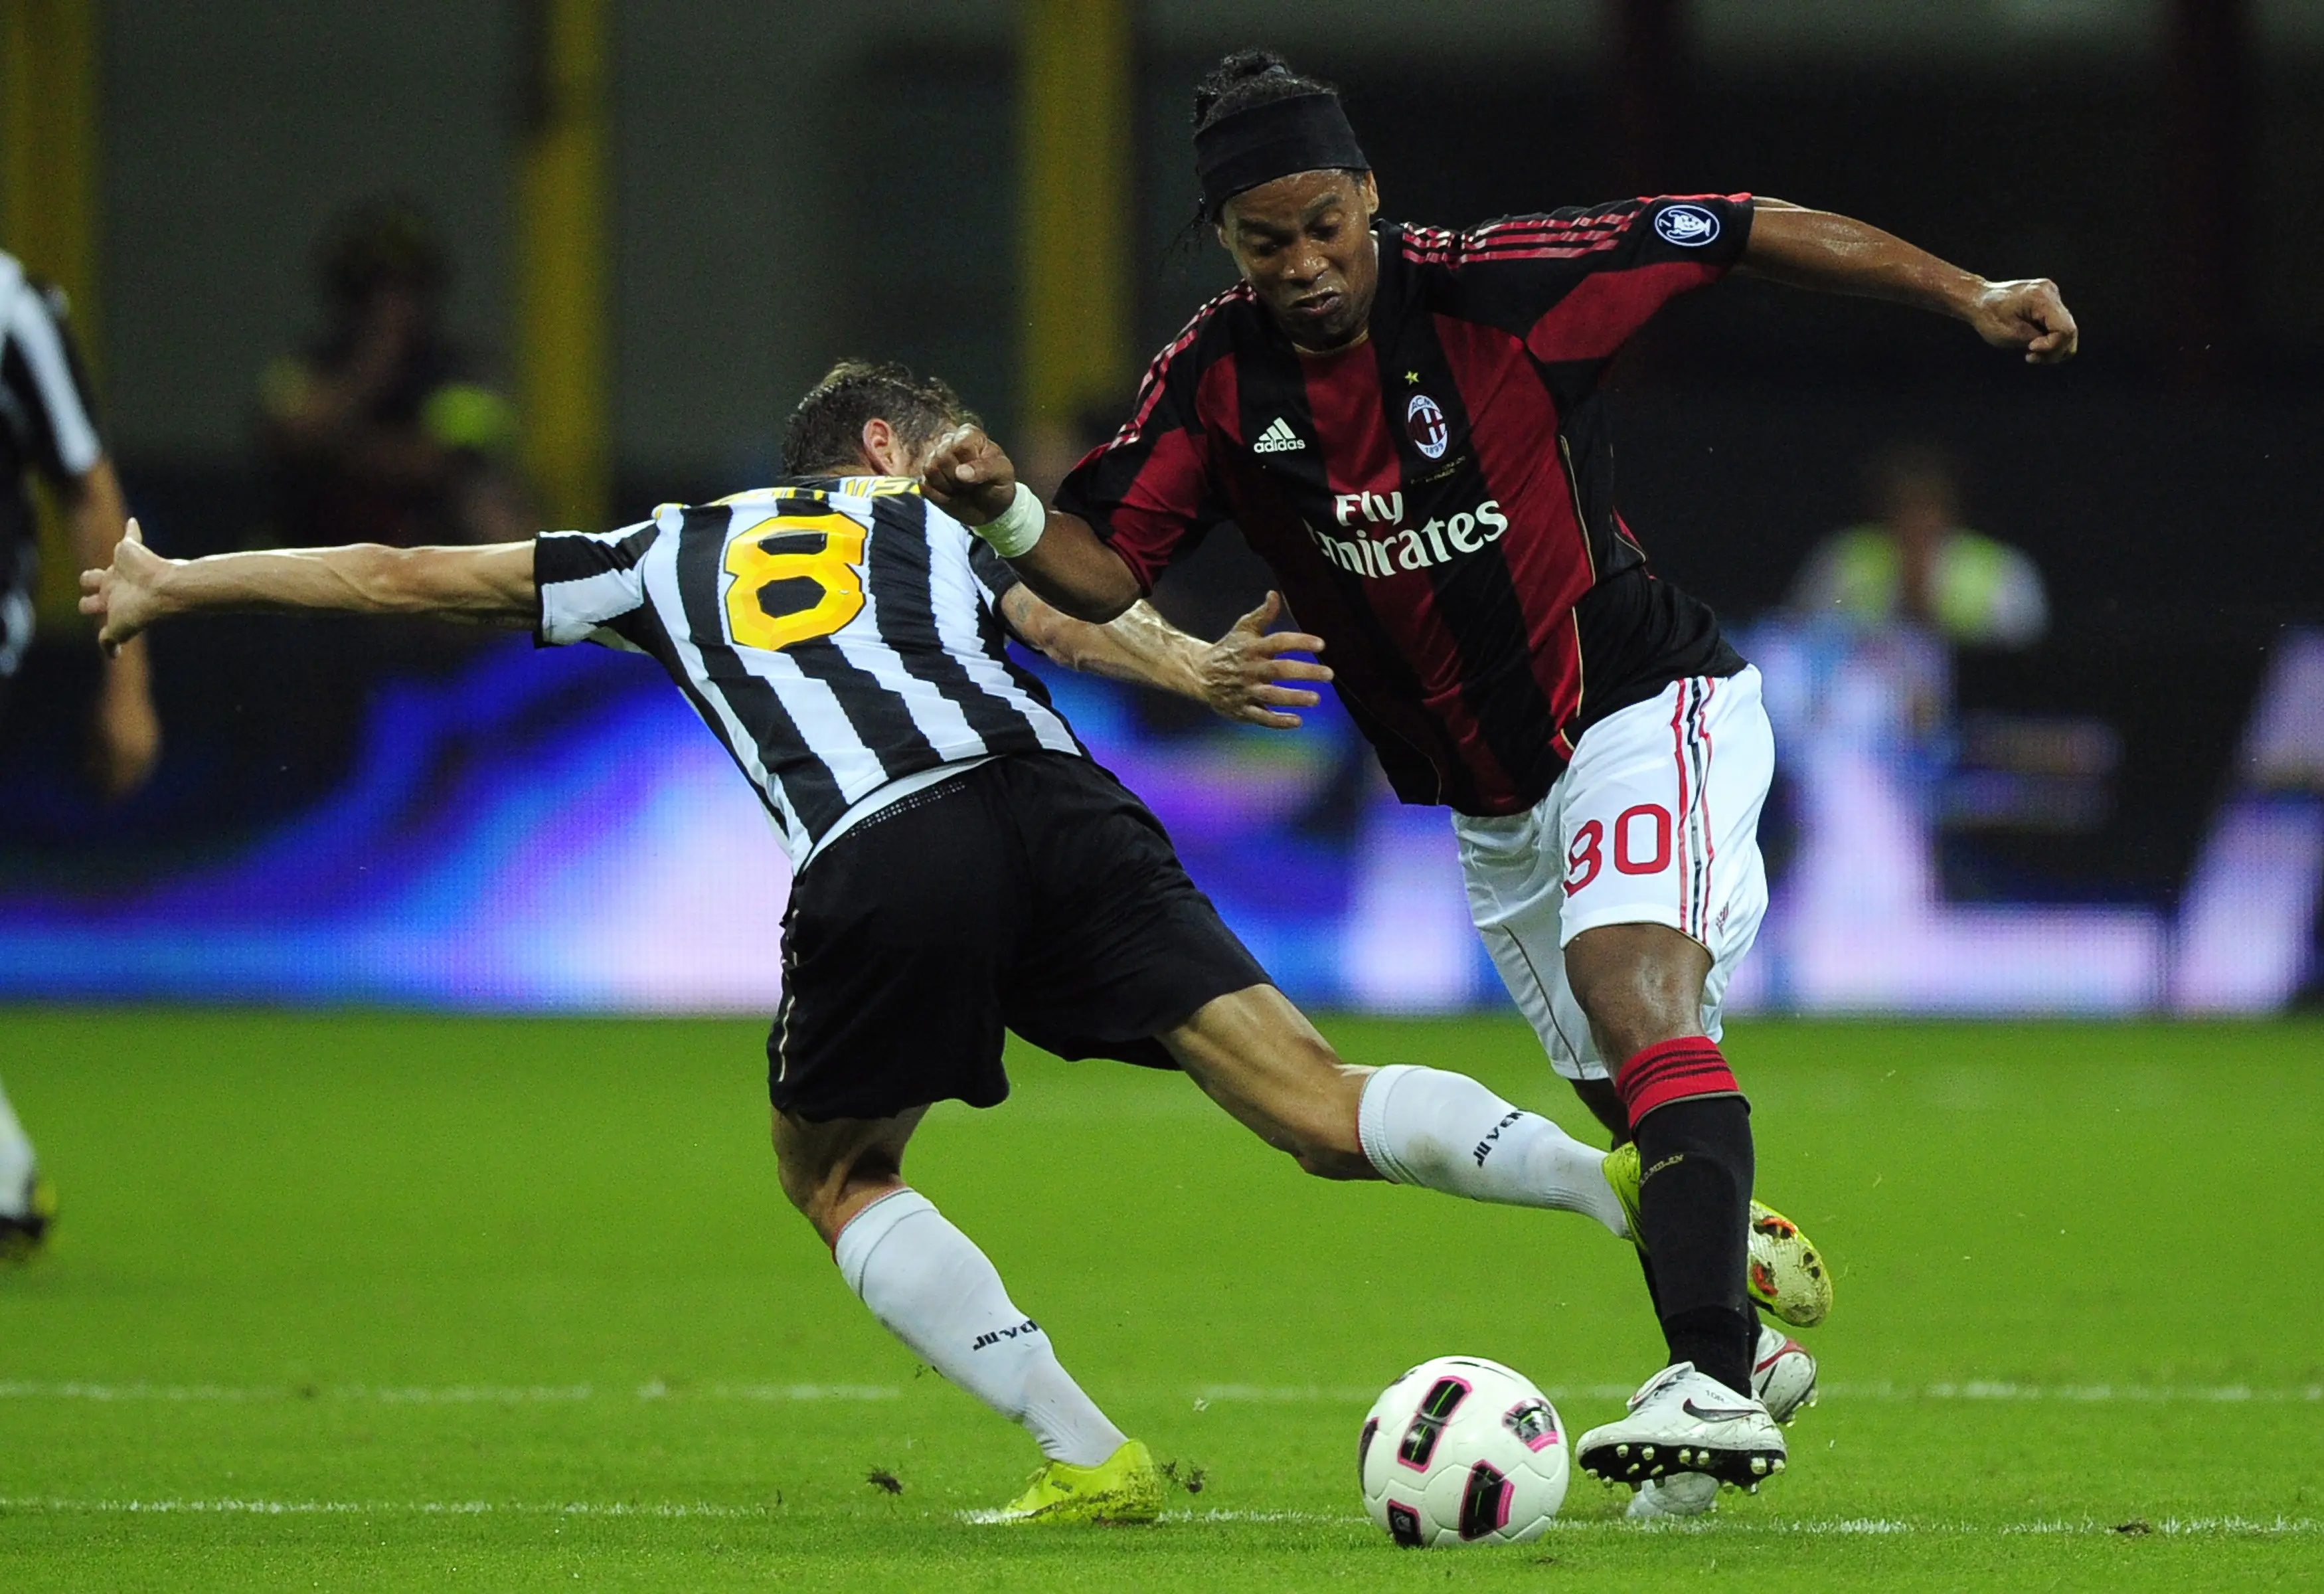 Ronaldinho cetak dua gol saat melawan Juventus (OLIVIER MORIN / AFP)